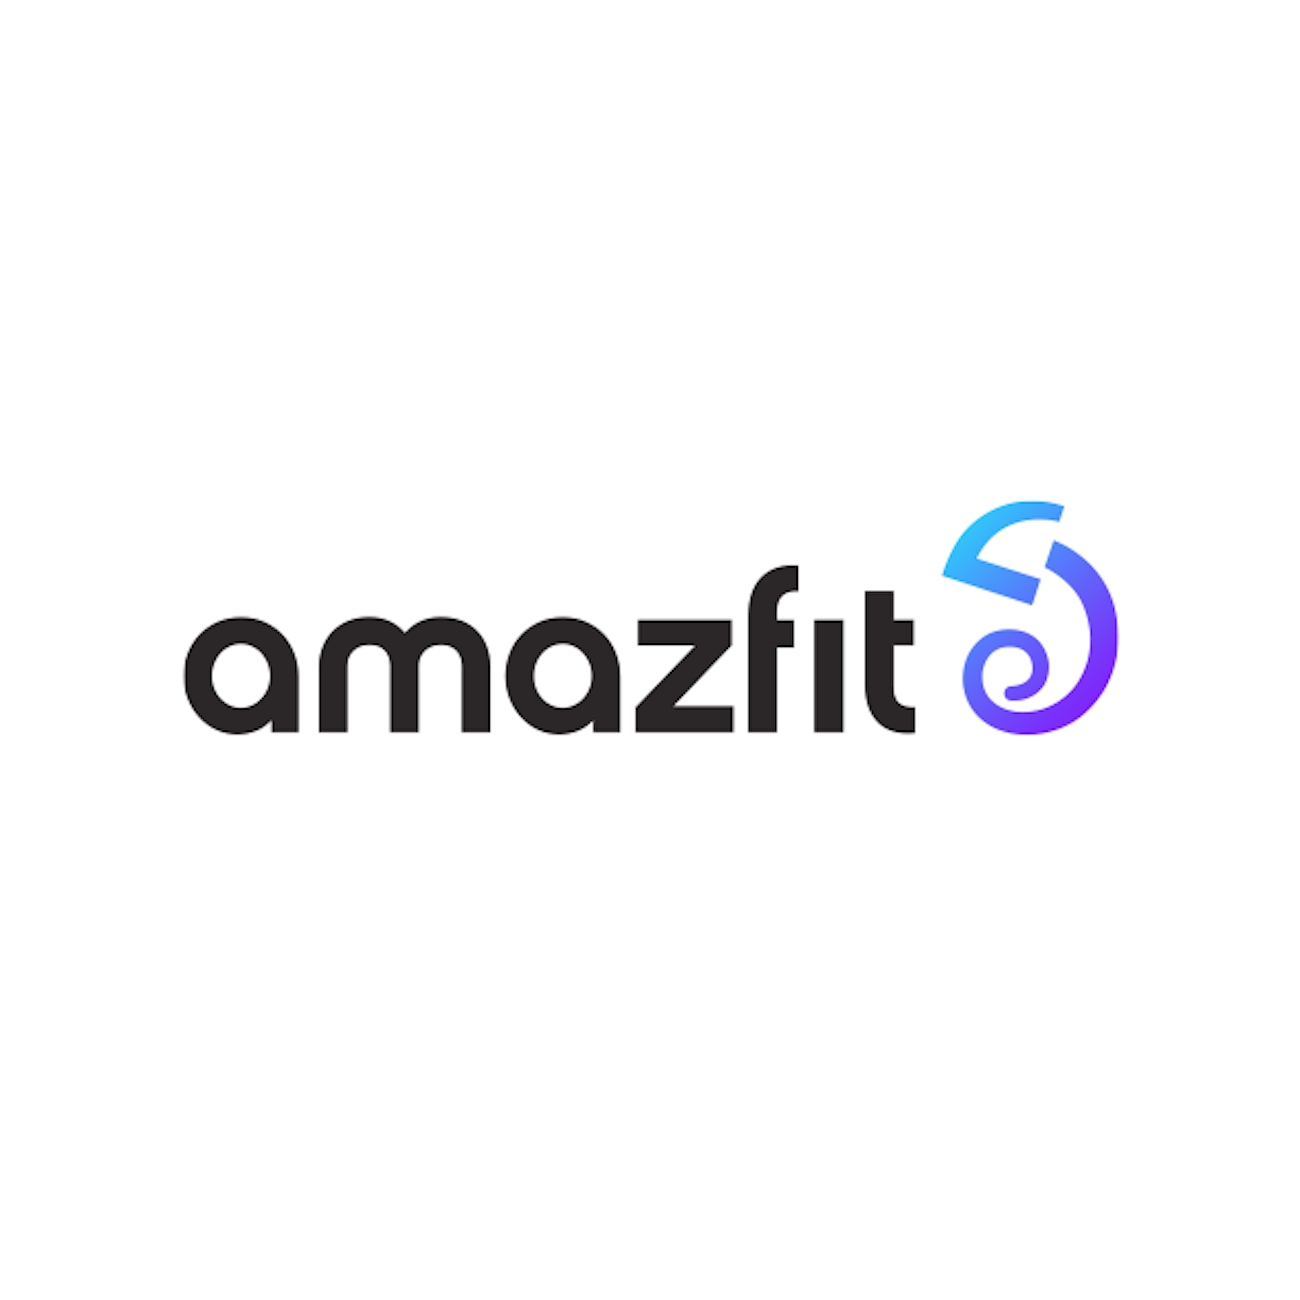 Amazfit odhalil 2. generaci hodinek Pop